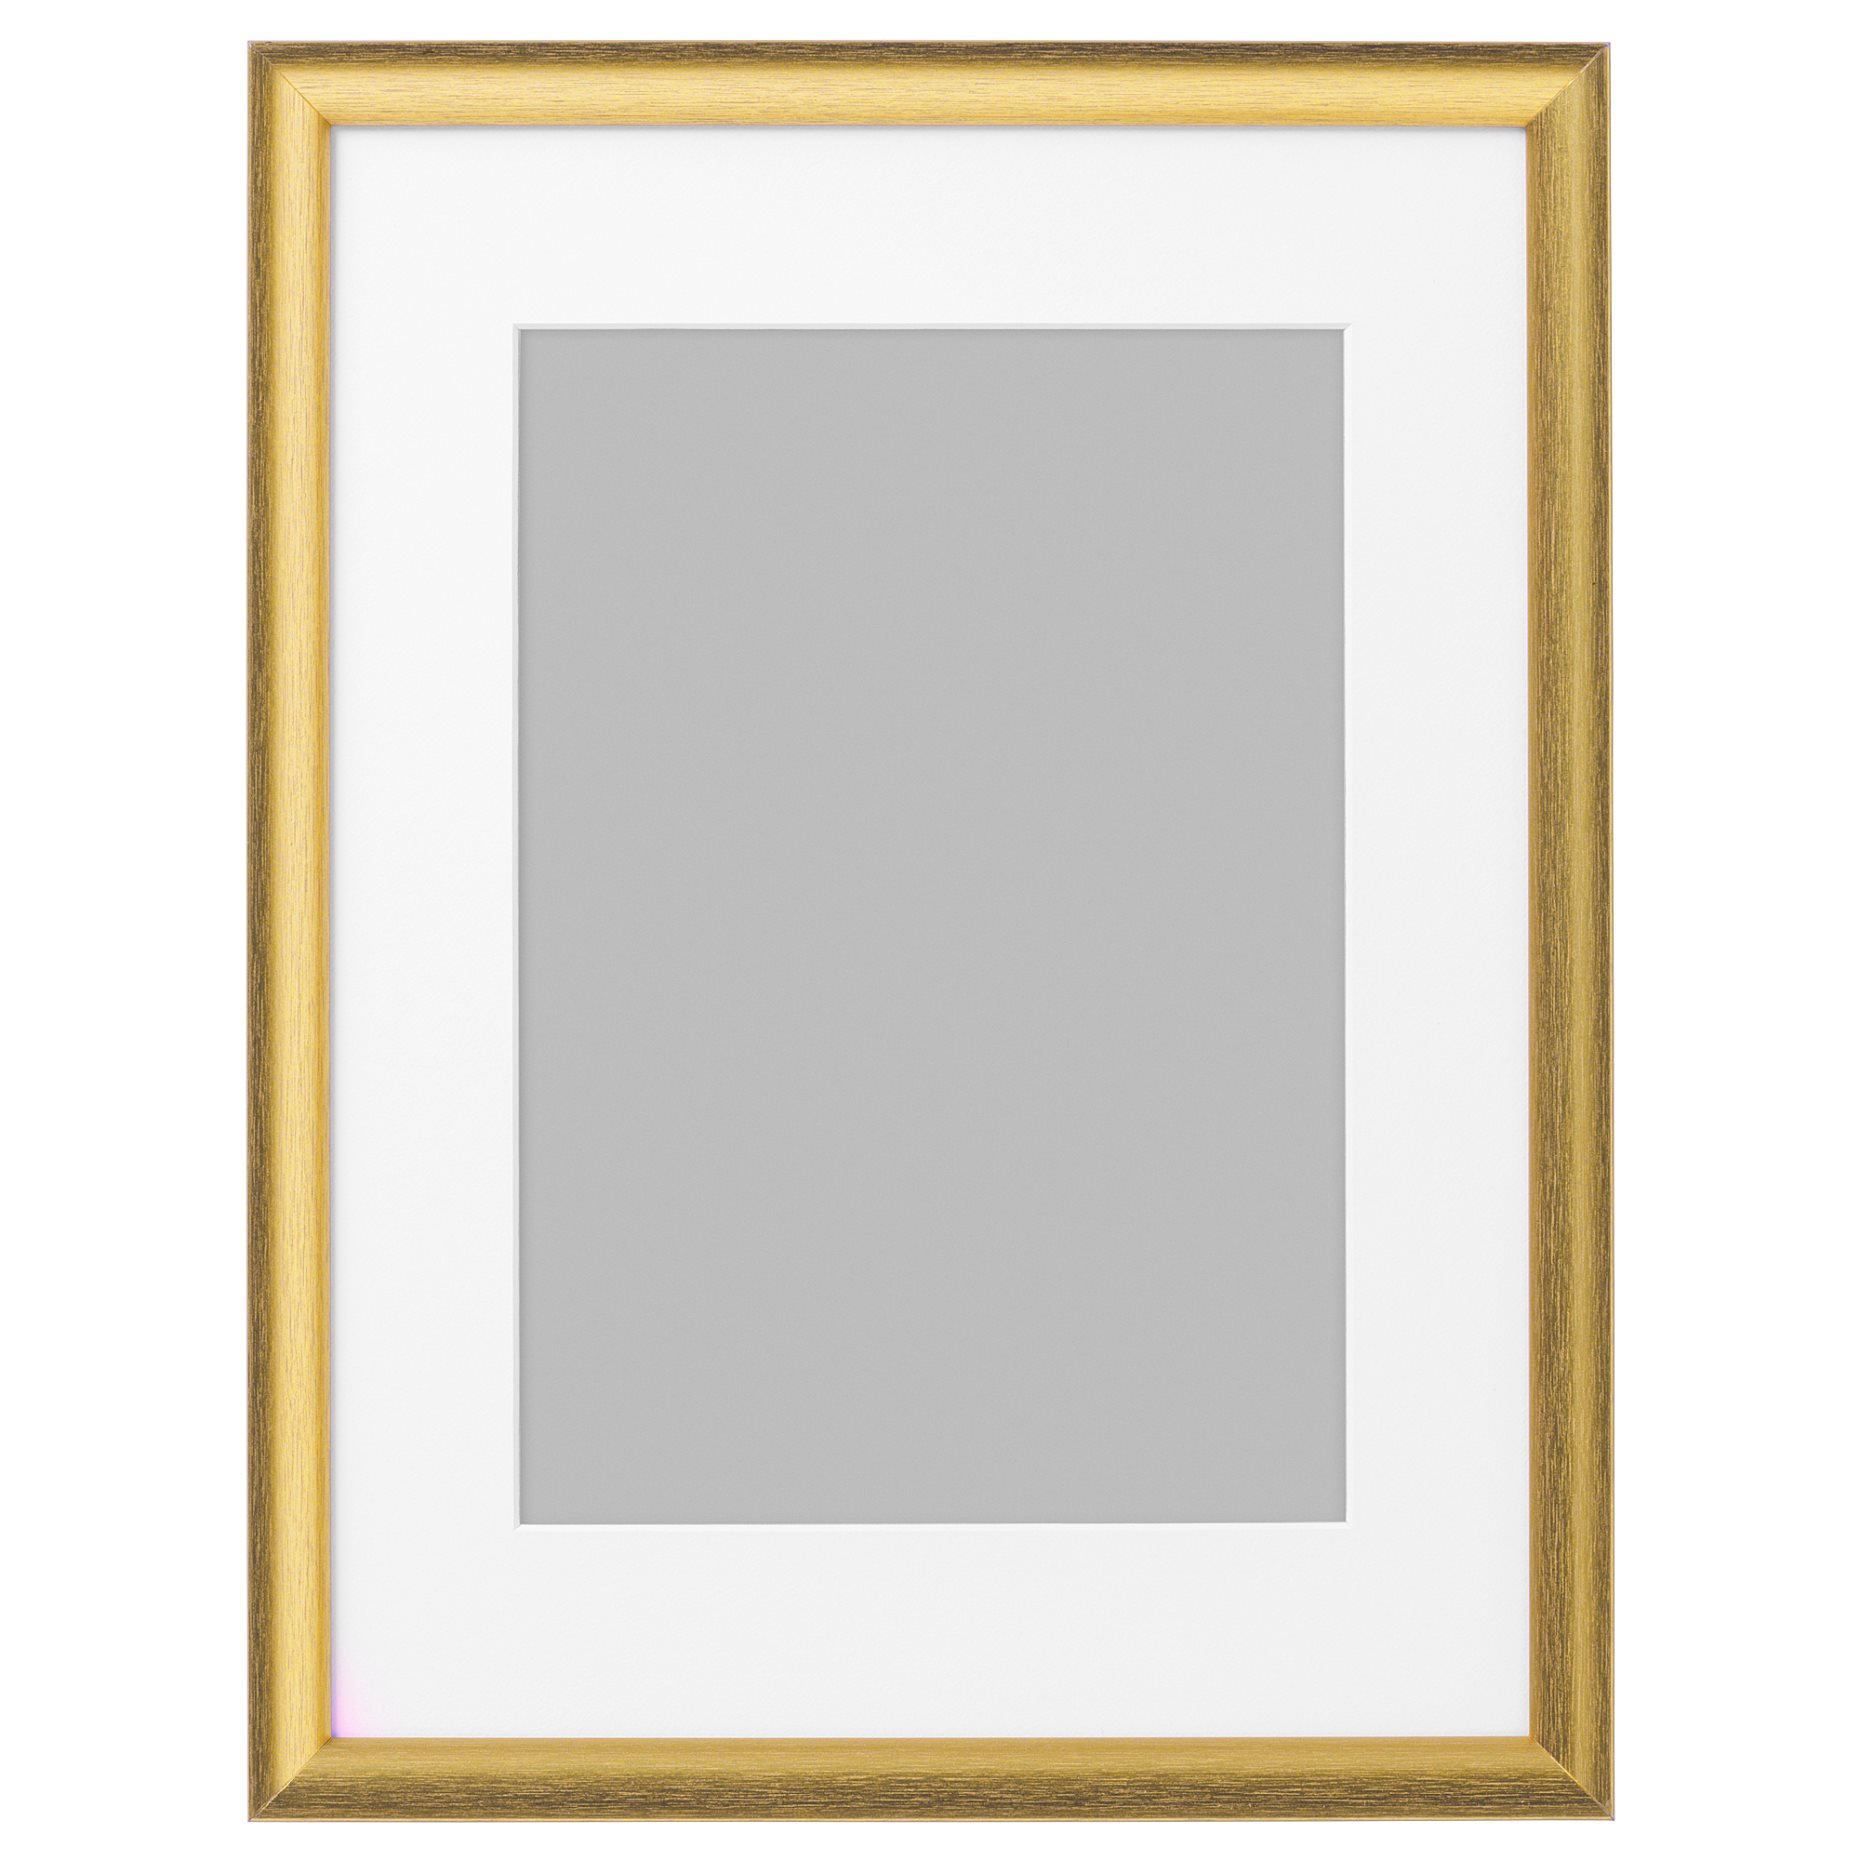 SILVERHÖJDEN, frame, 30x40 cm, 503.704.09